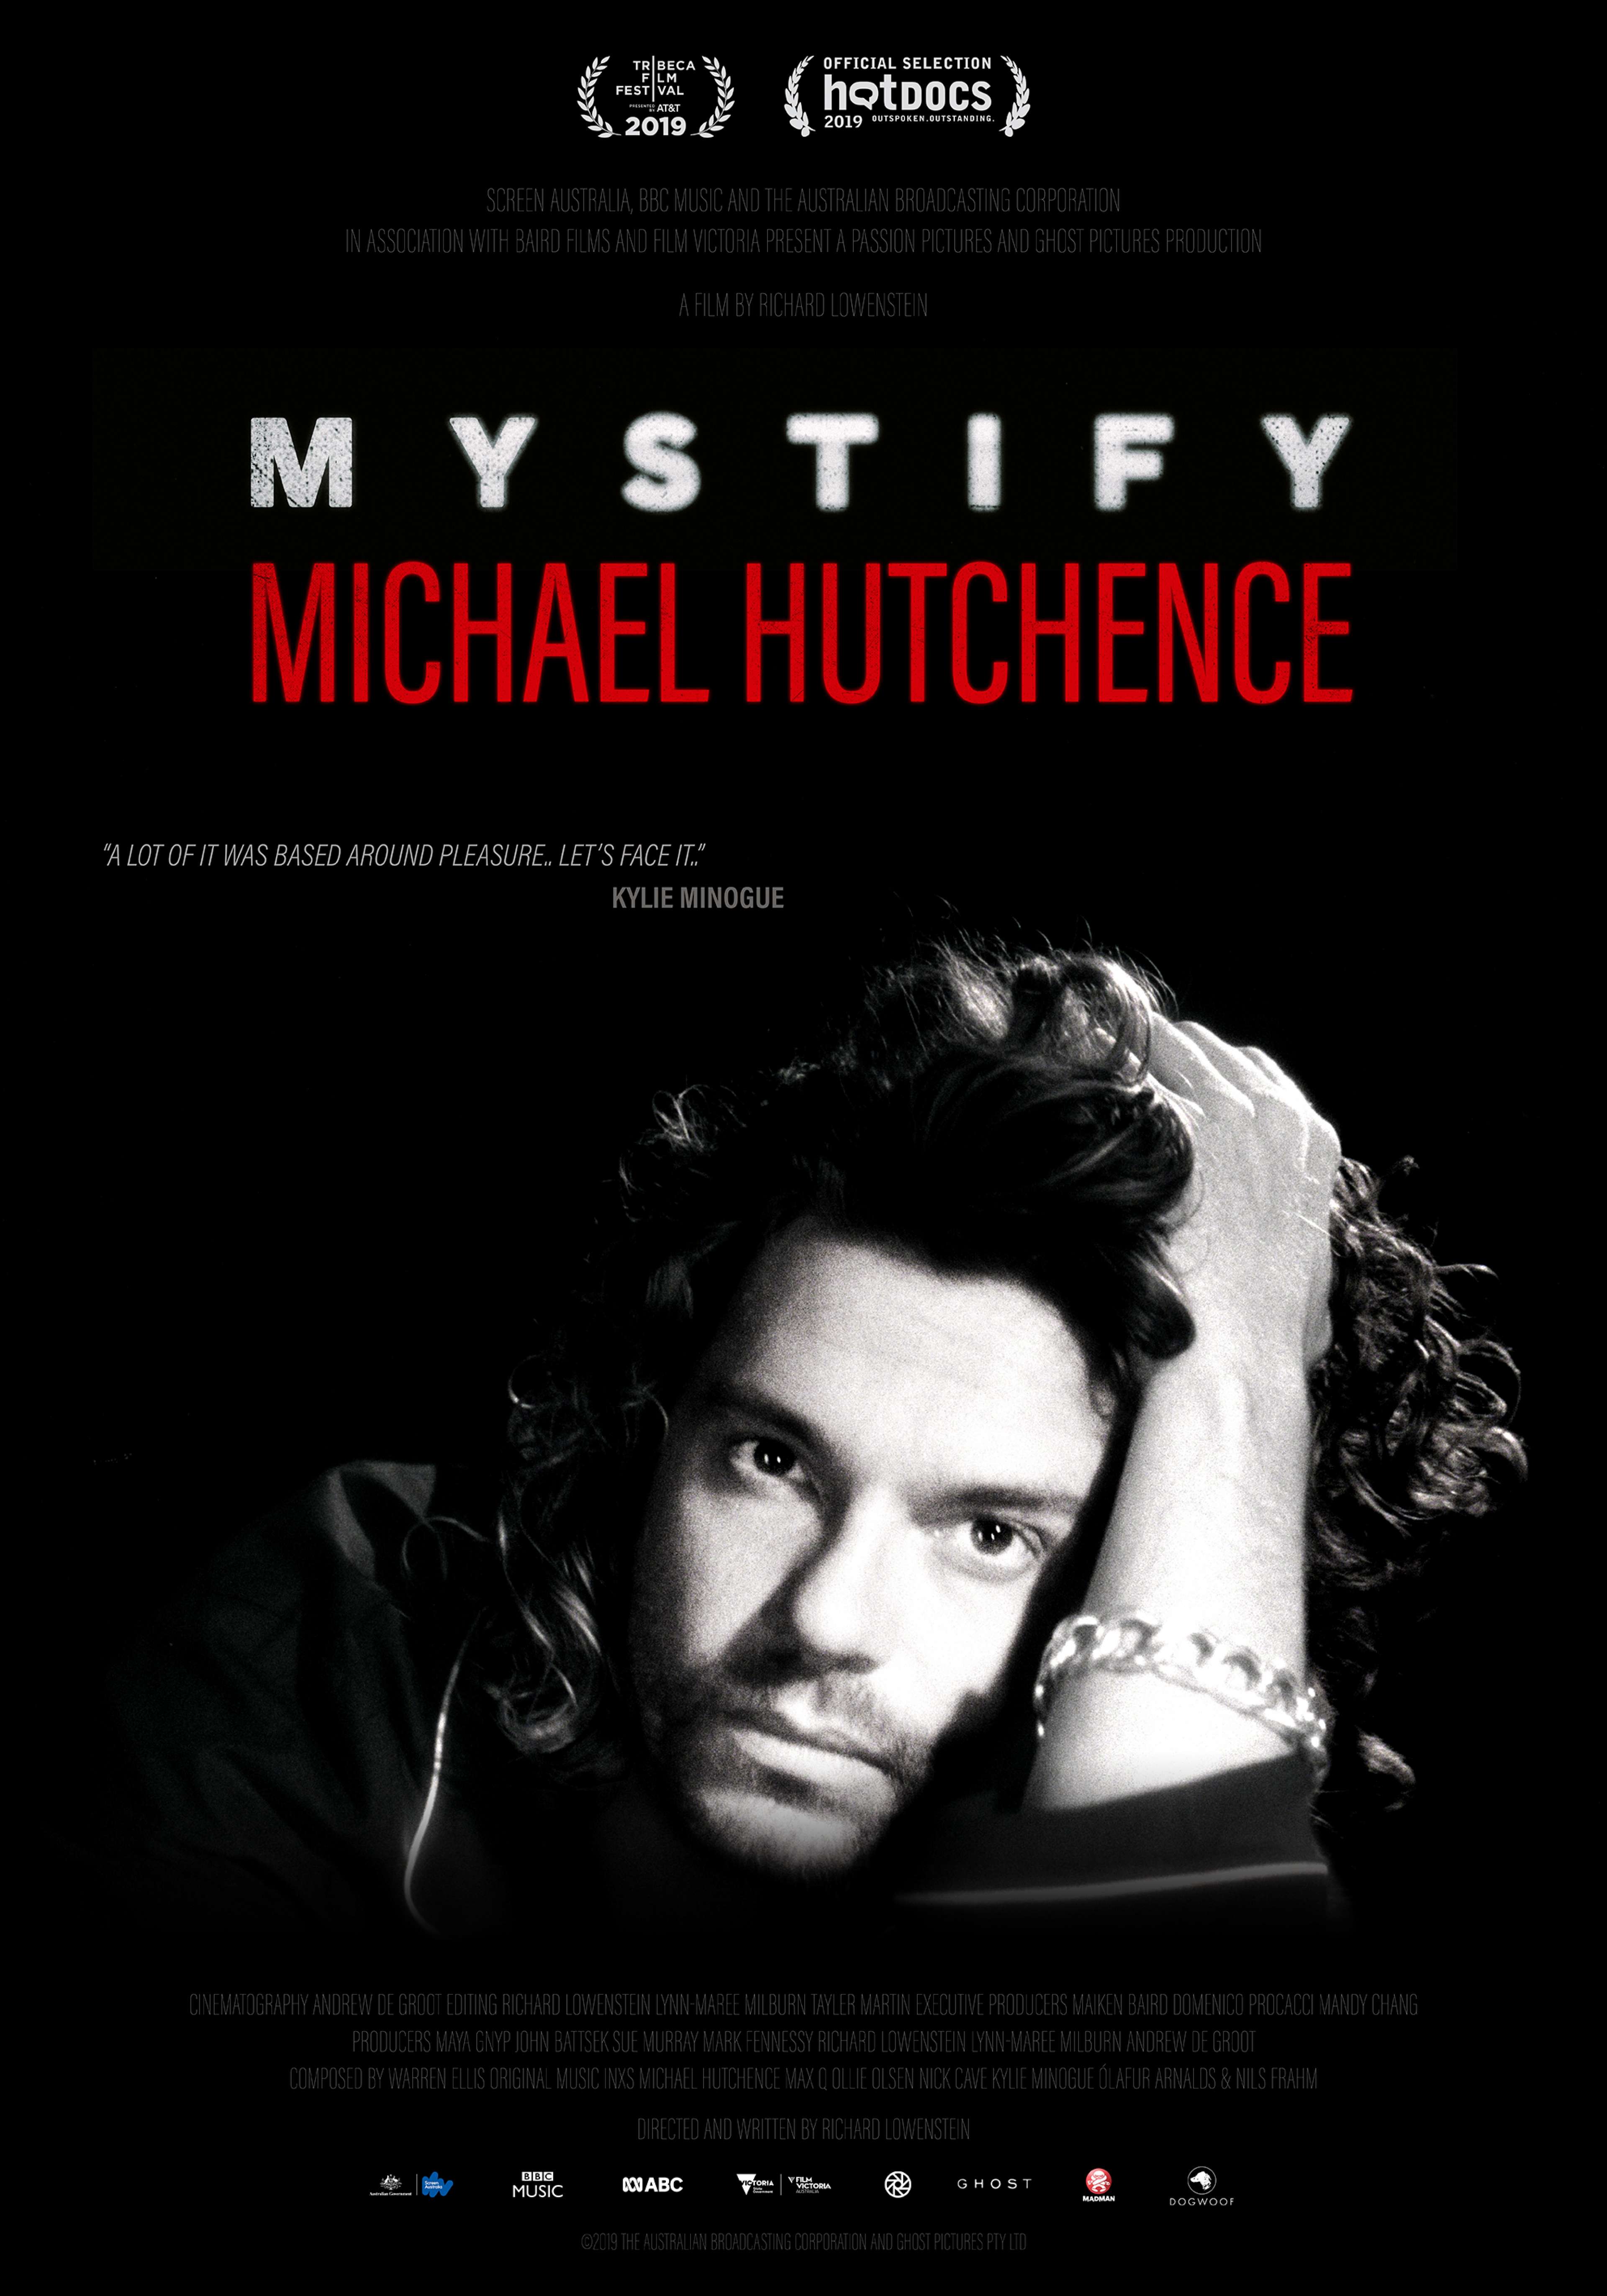 MYSTIFY Michael Hutchence hits cinemas nationwide on July 4